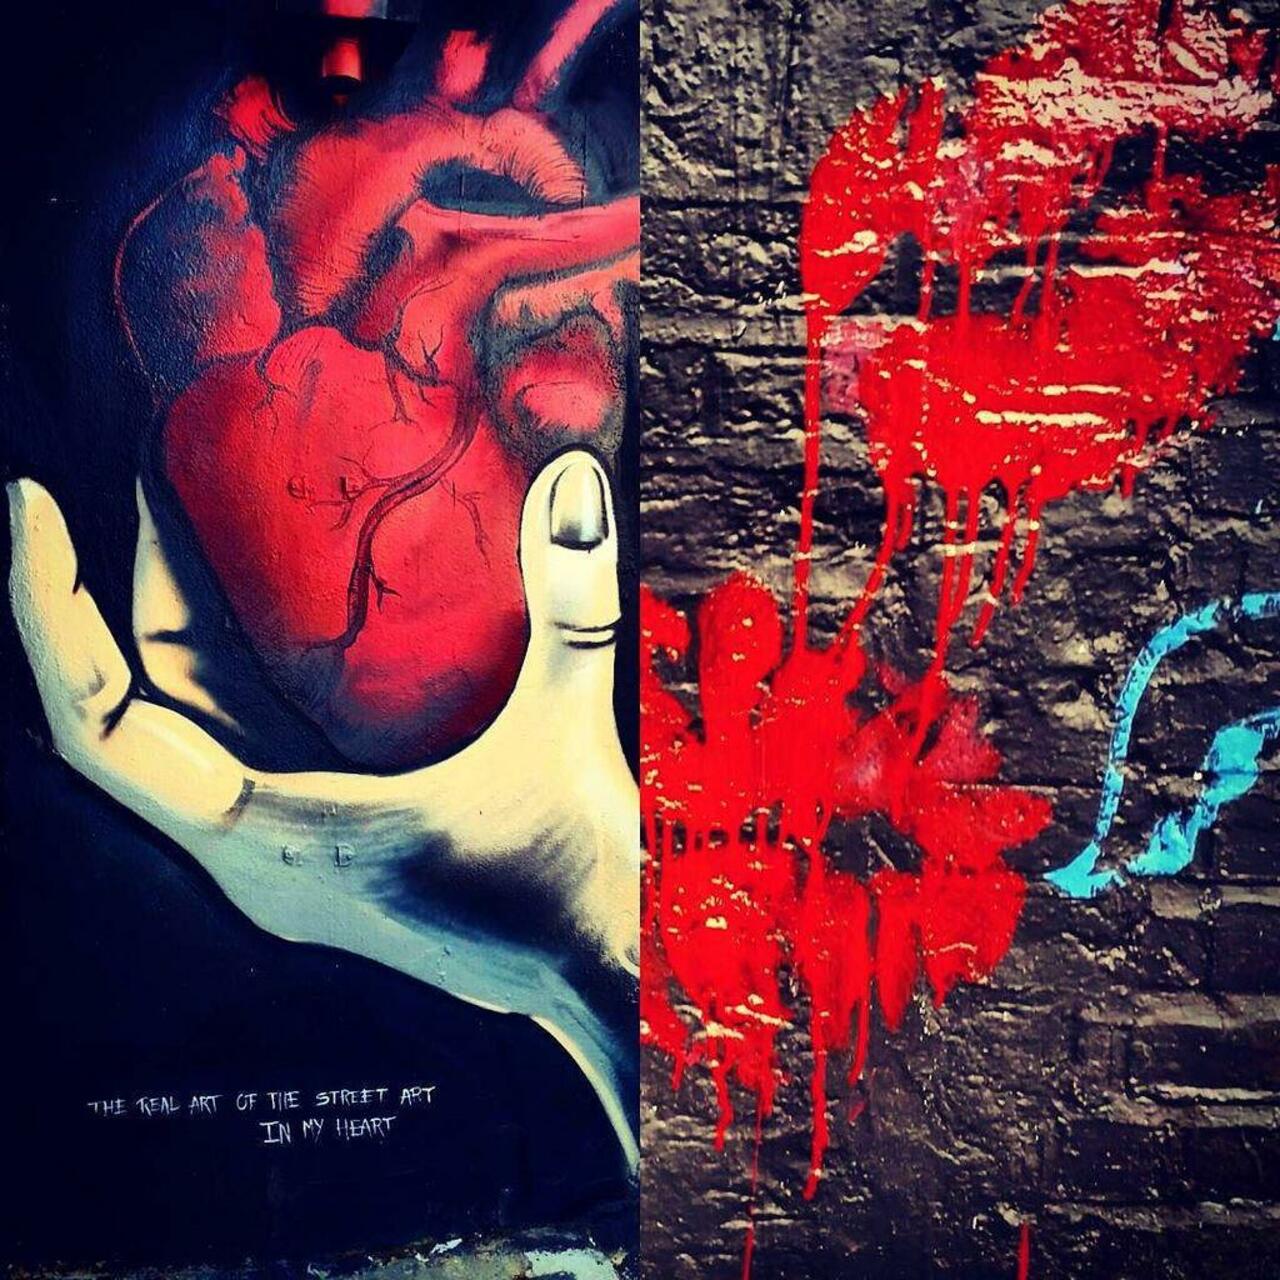 The Real Art of Street Art in my Heart | #kisses #heart #graffiti #urbanart #London #artwork #red #power #streetart… http://t.co/hJDpzr58vq